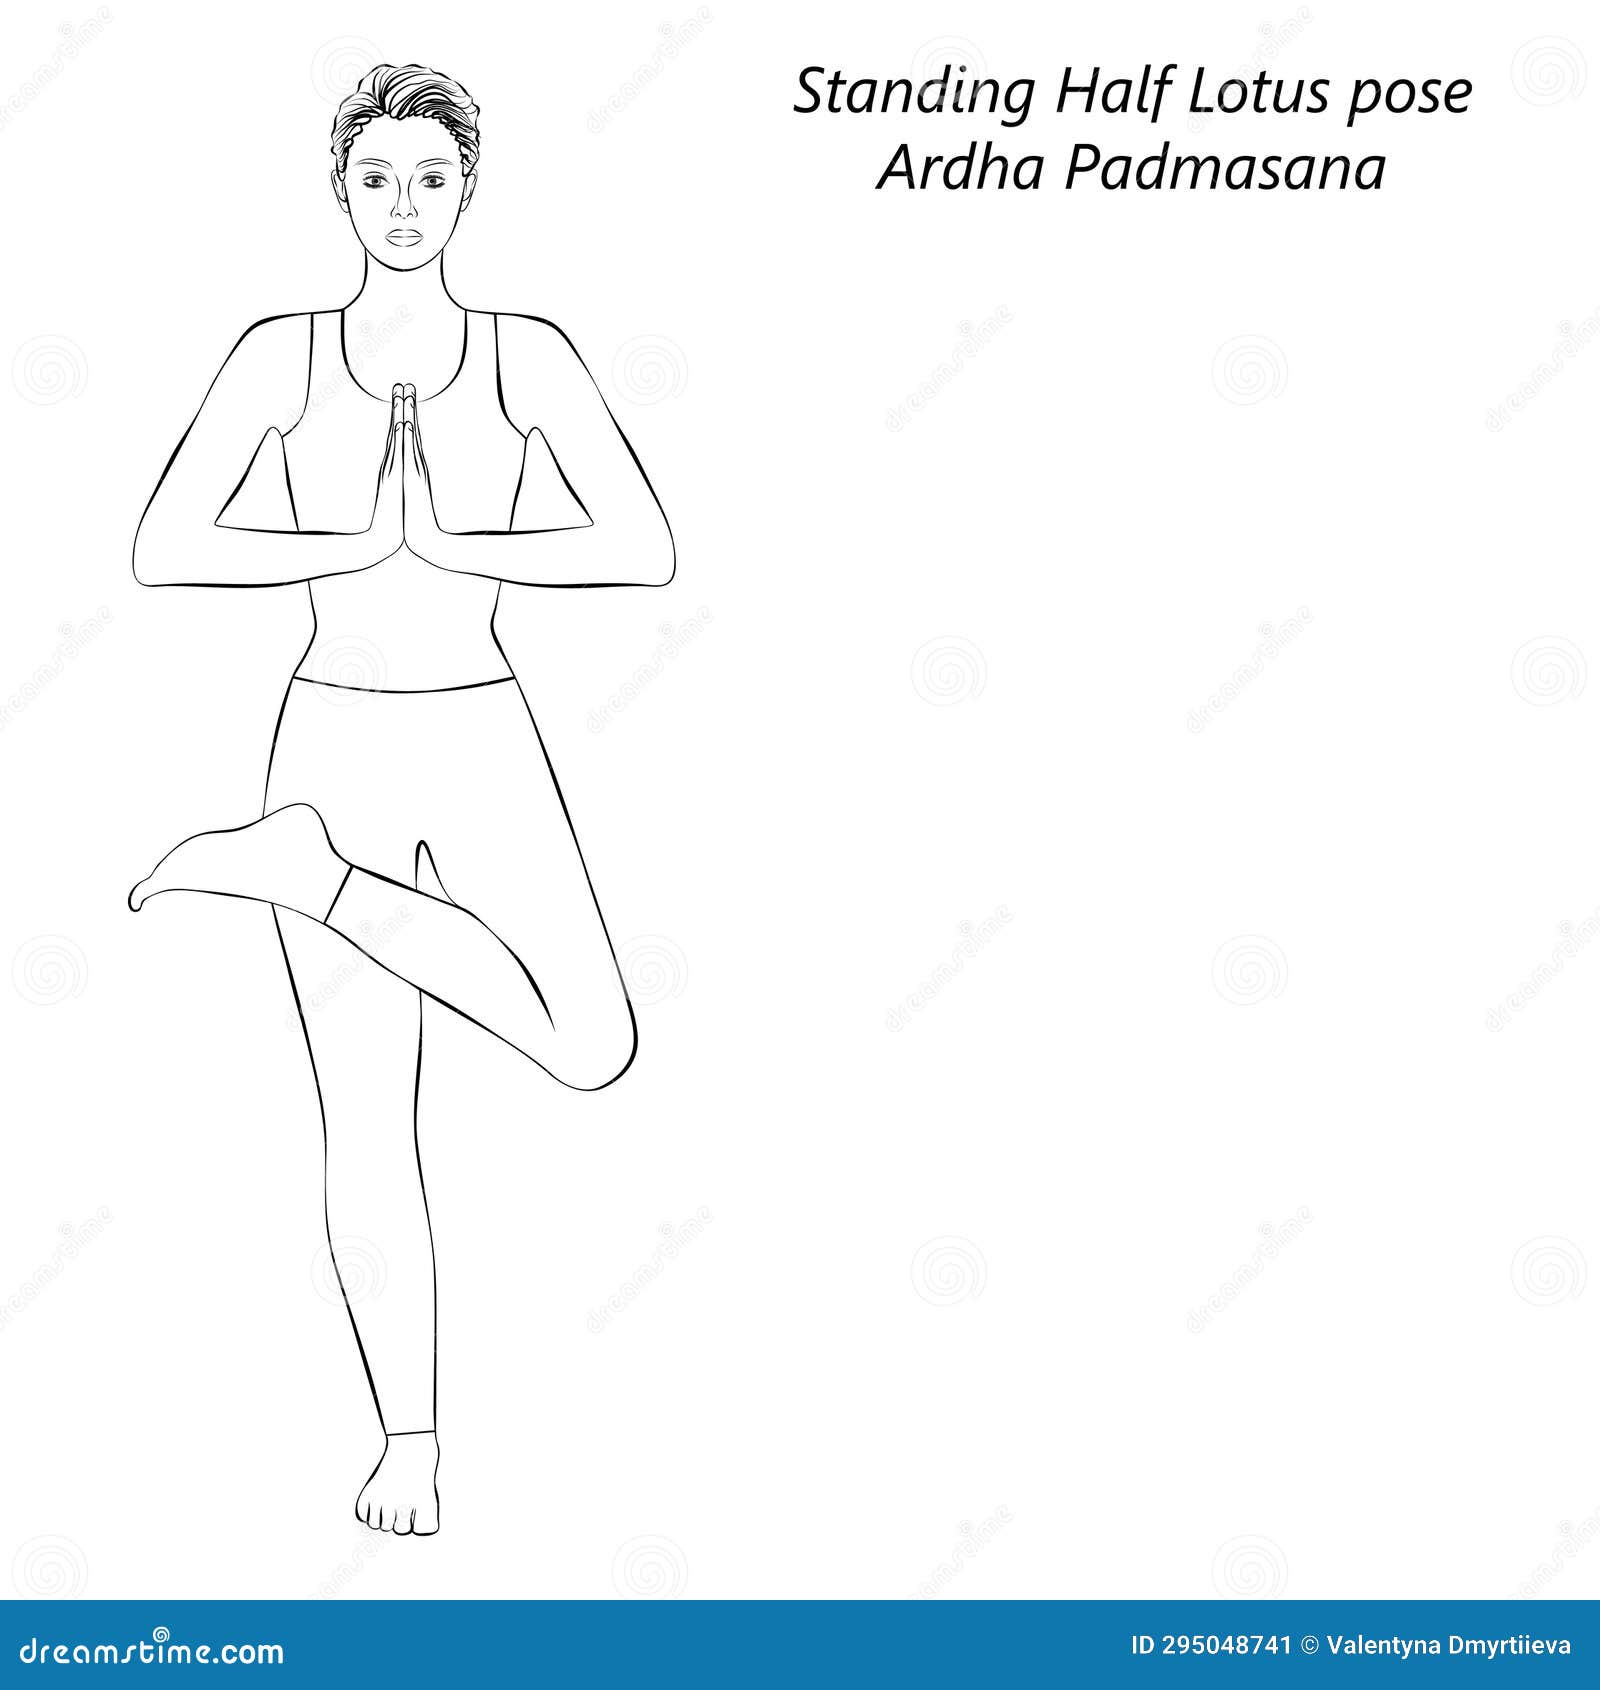 Lotus Pose | Padmasana | How to do | Benefits Lotus Pose